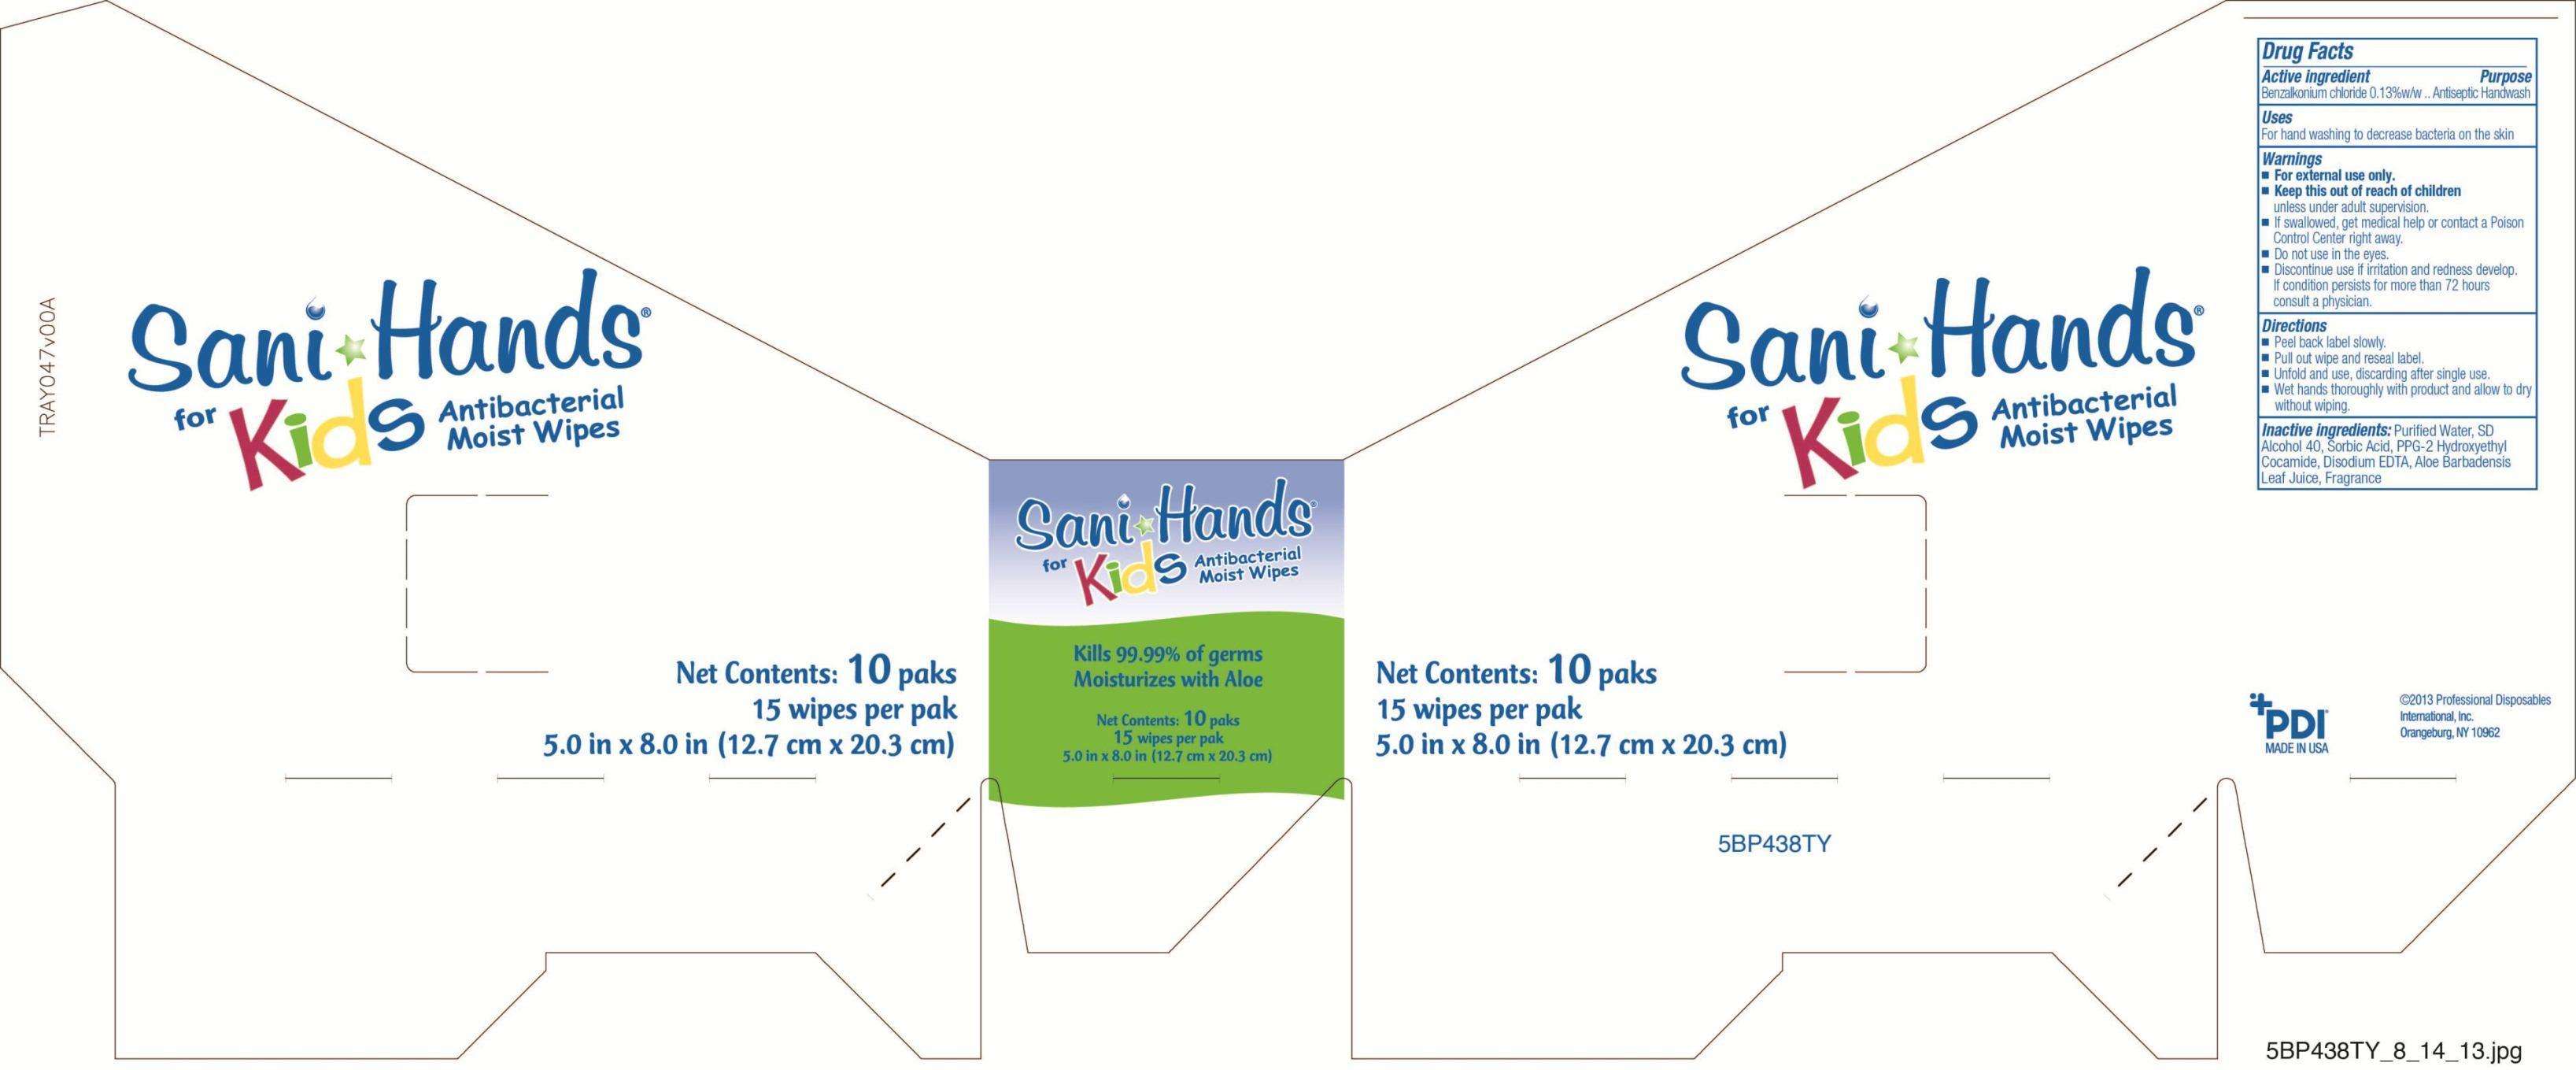 Sani-Hands for Kids